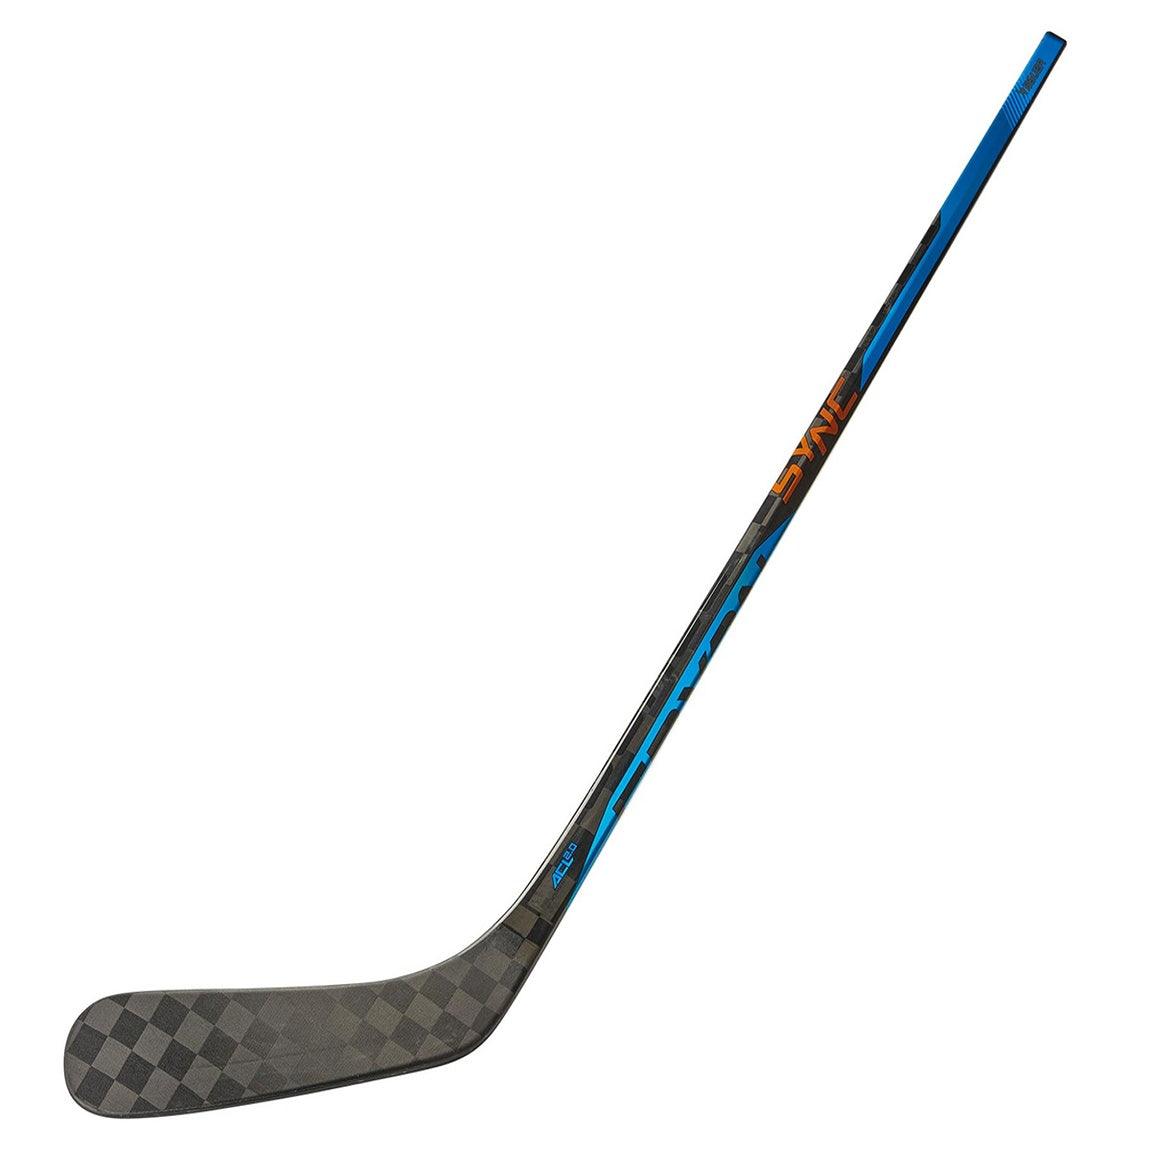 Nexus Sync Hockey Stick - Intermediate - Sports Excellence